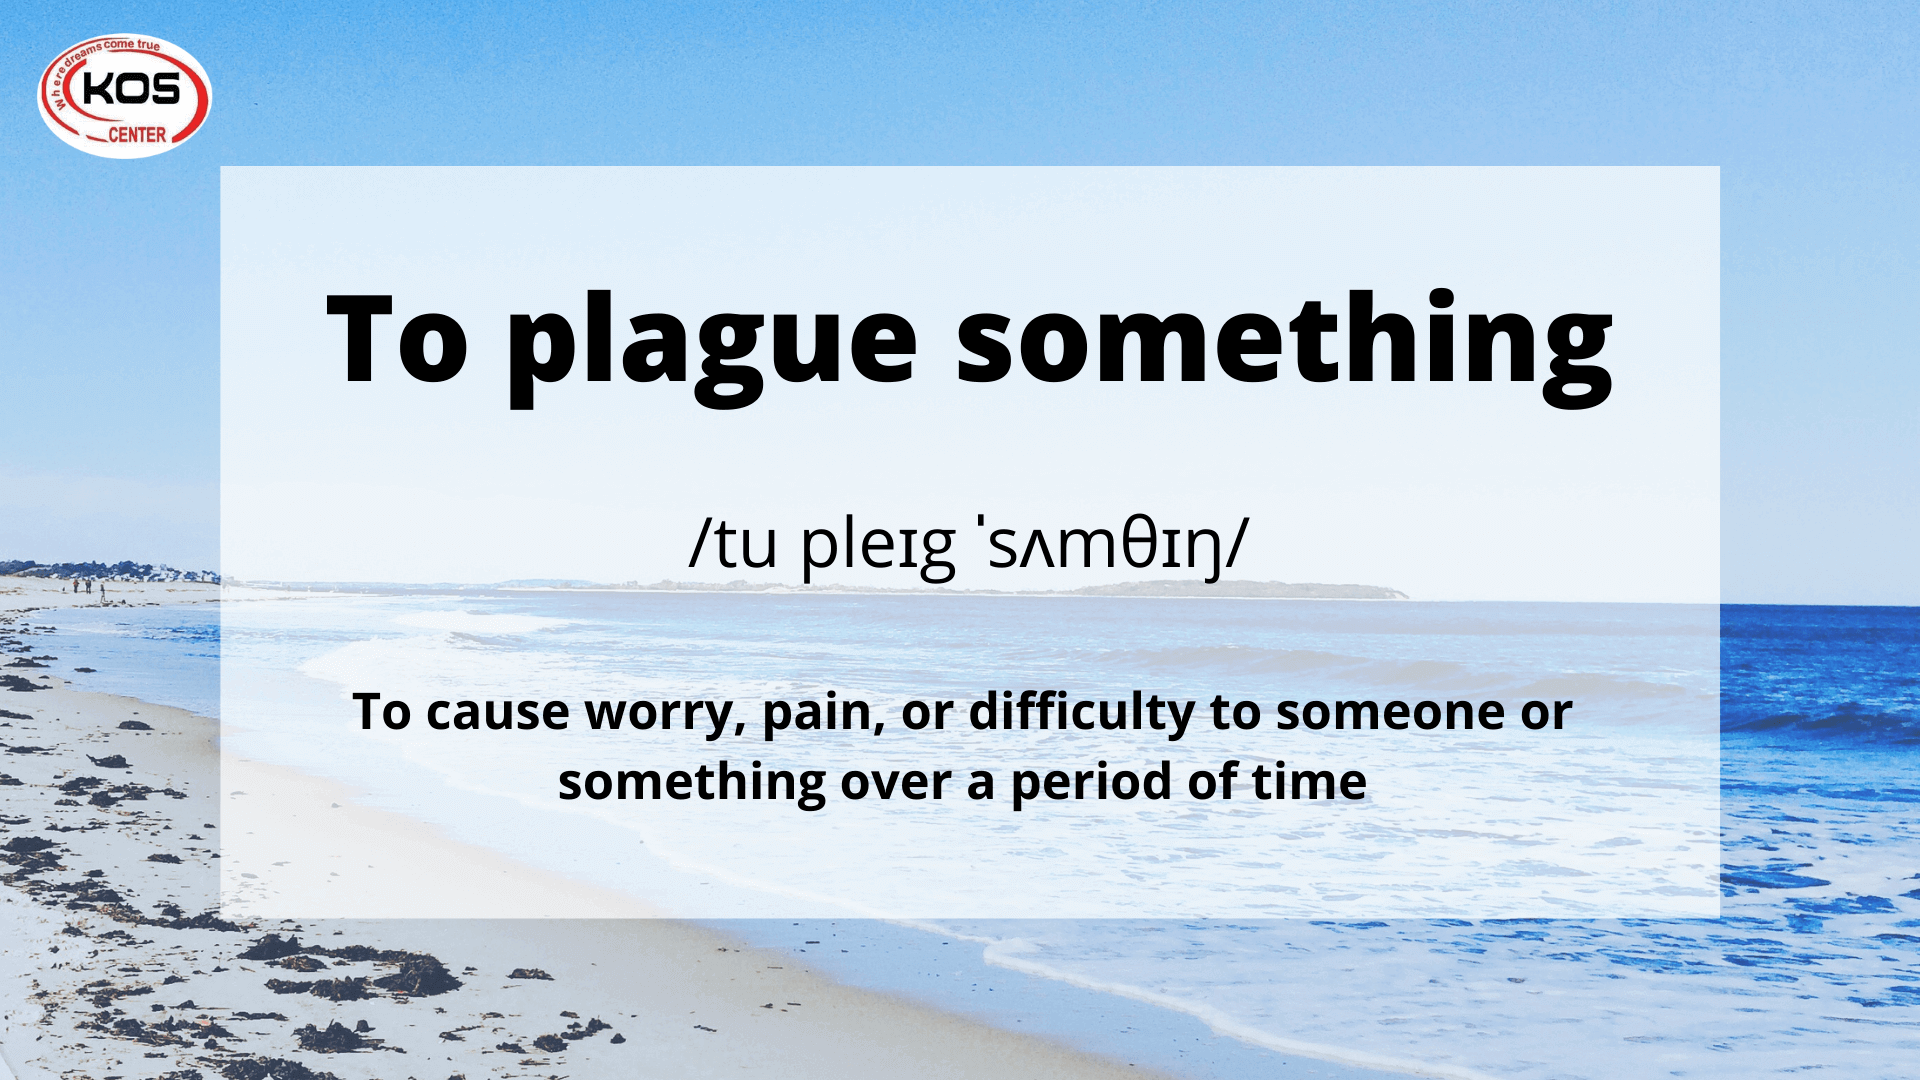 To plague something